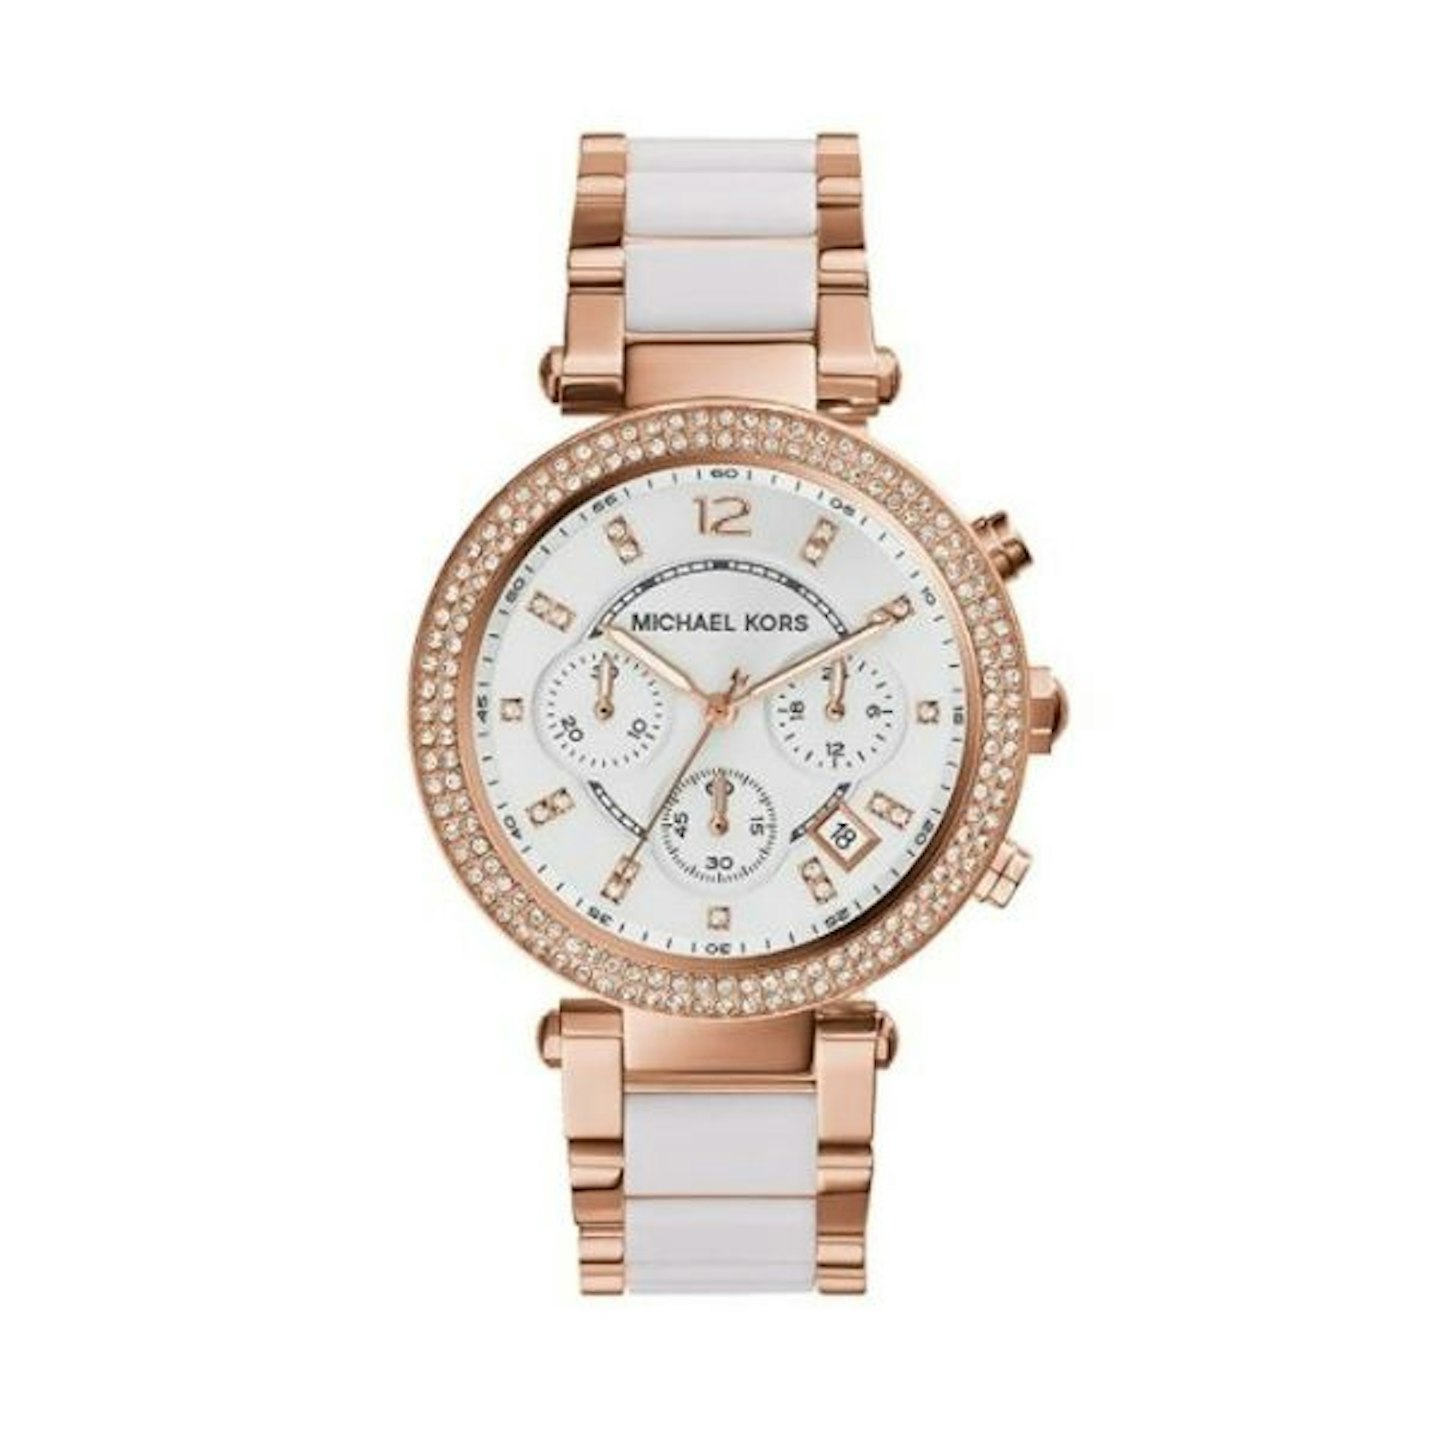 Michael Kors Women's Chronograph Quartz Watch